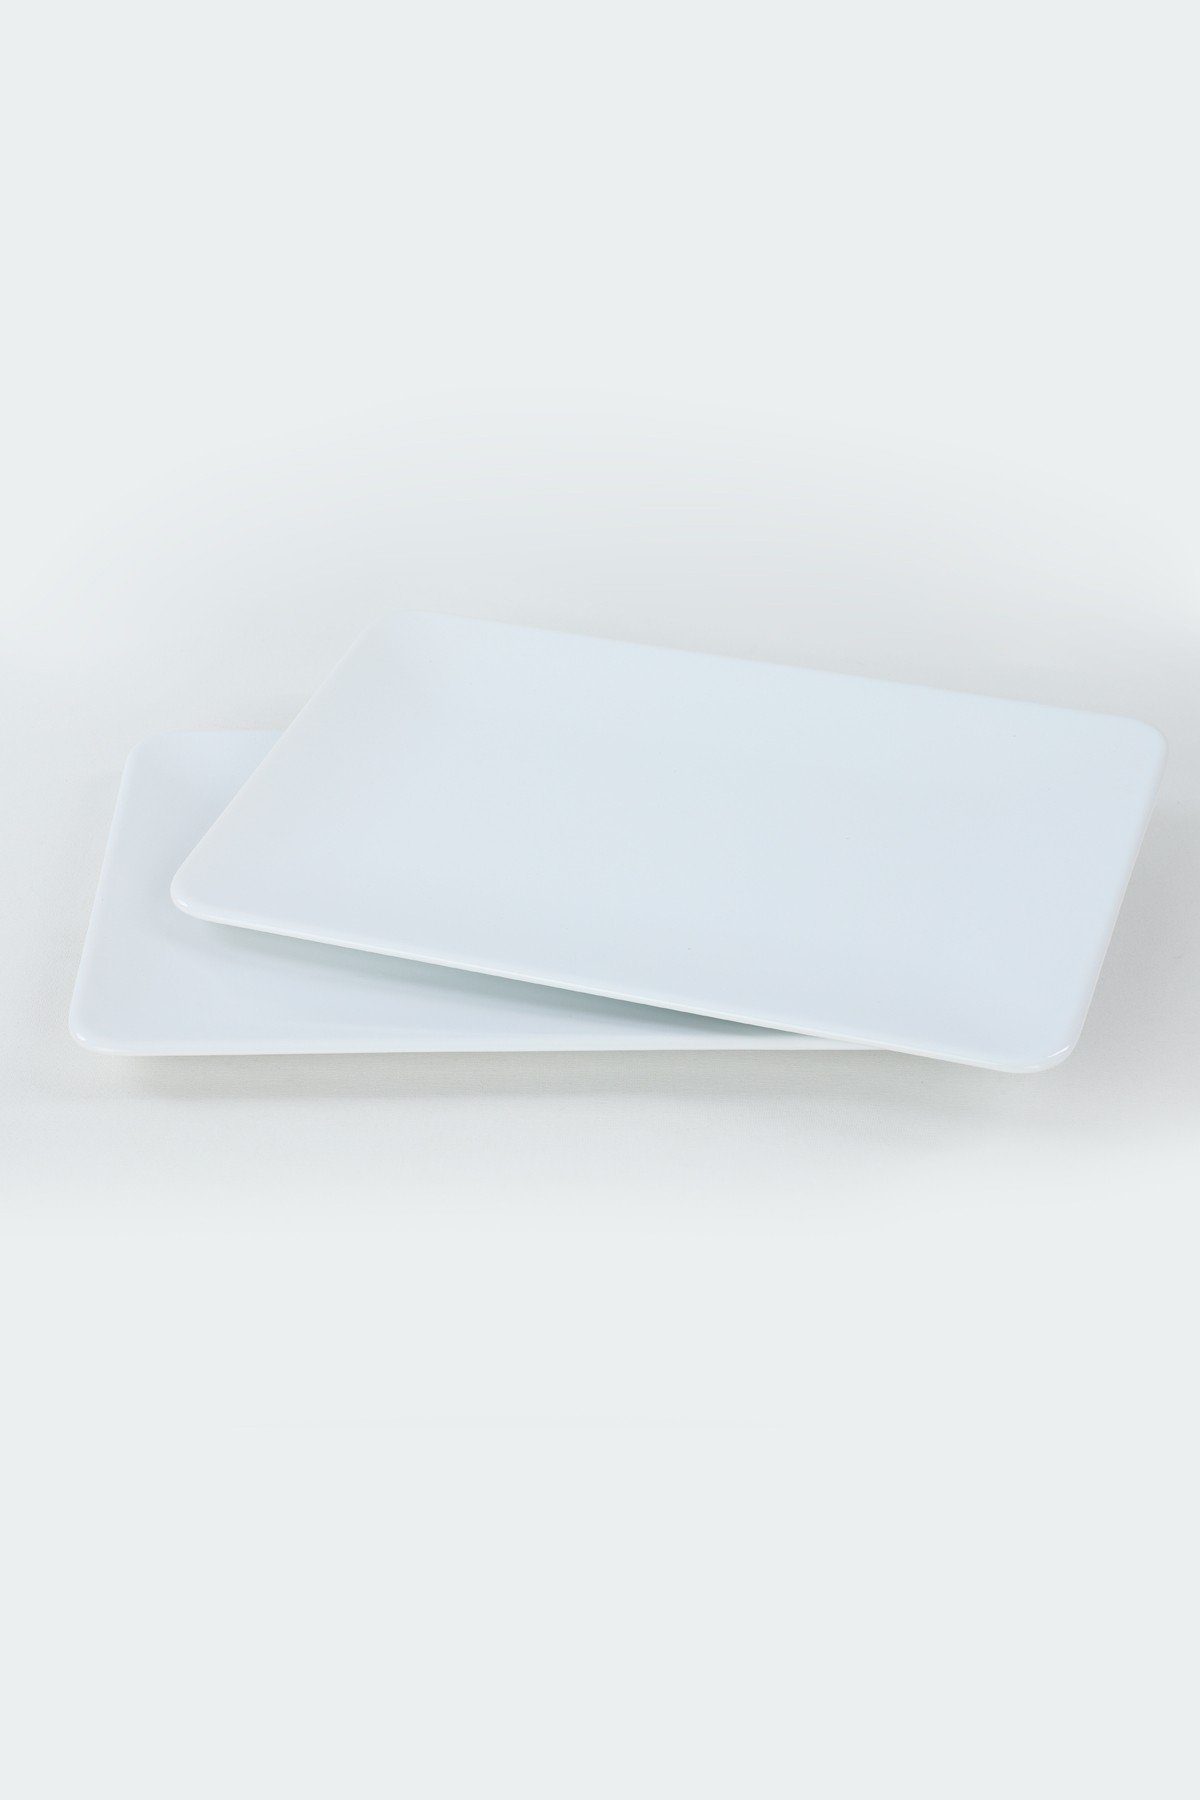 Weiß, Essteller, 100% Keramik Teller-Set KRM1721, Hermia Concept